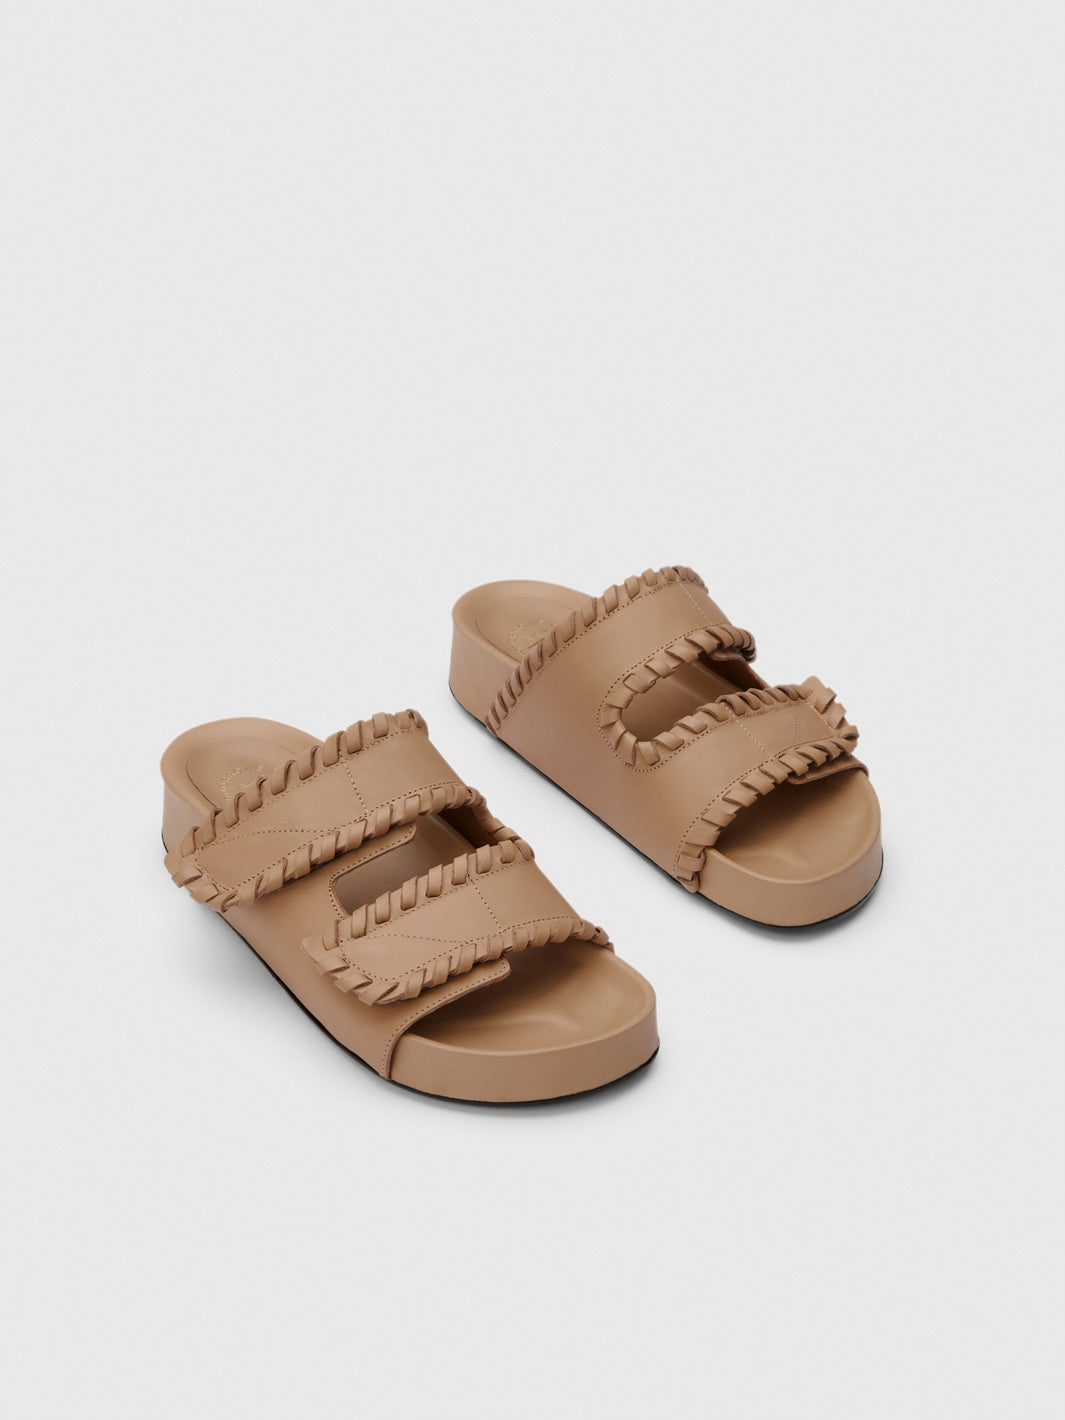 Furlo Stitch Nocciola Leather Comfy sandals